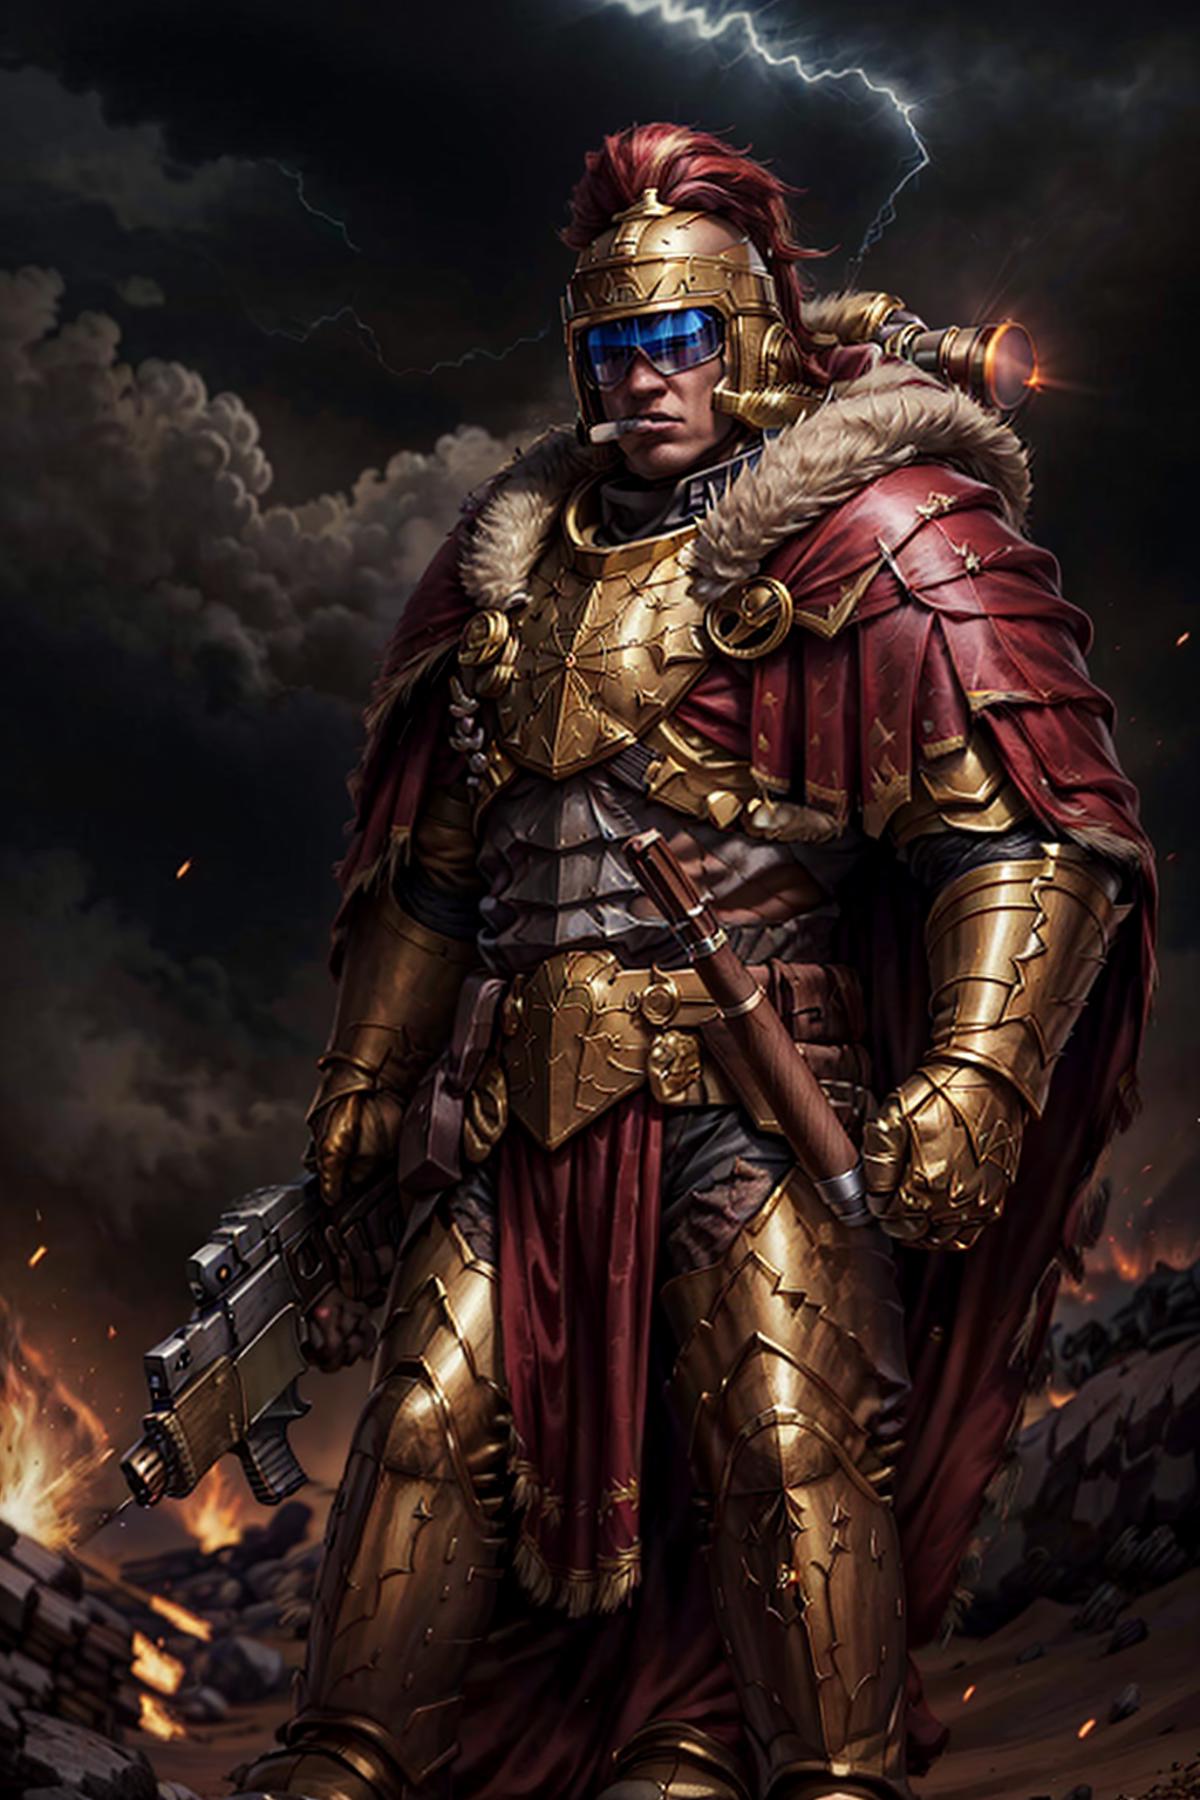 Thunder Warriors, Legiones Cataegis image by ccaraxess